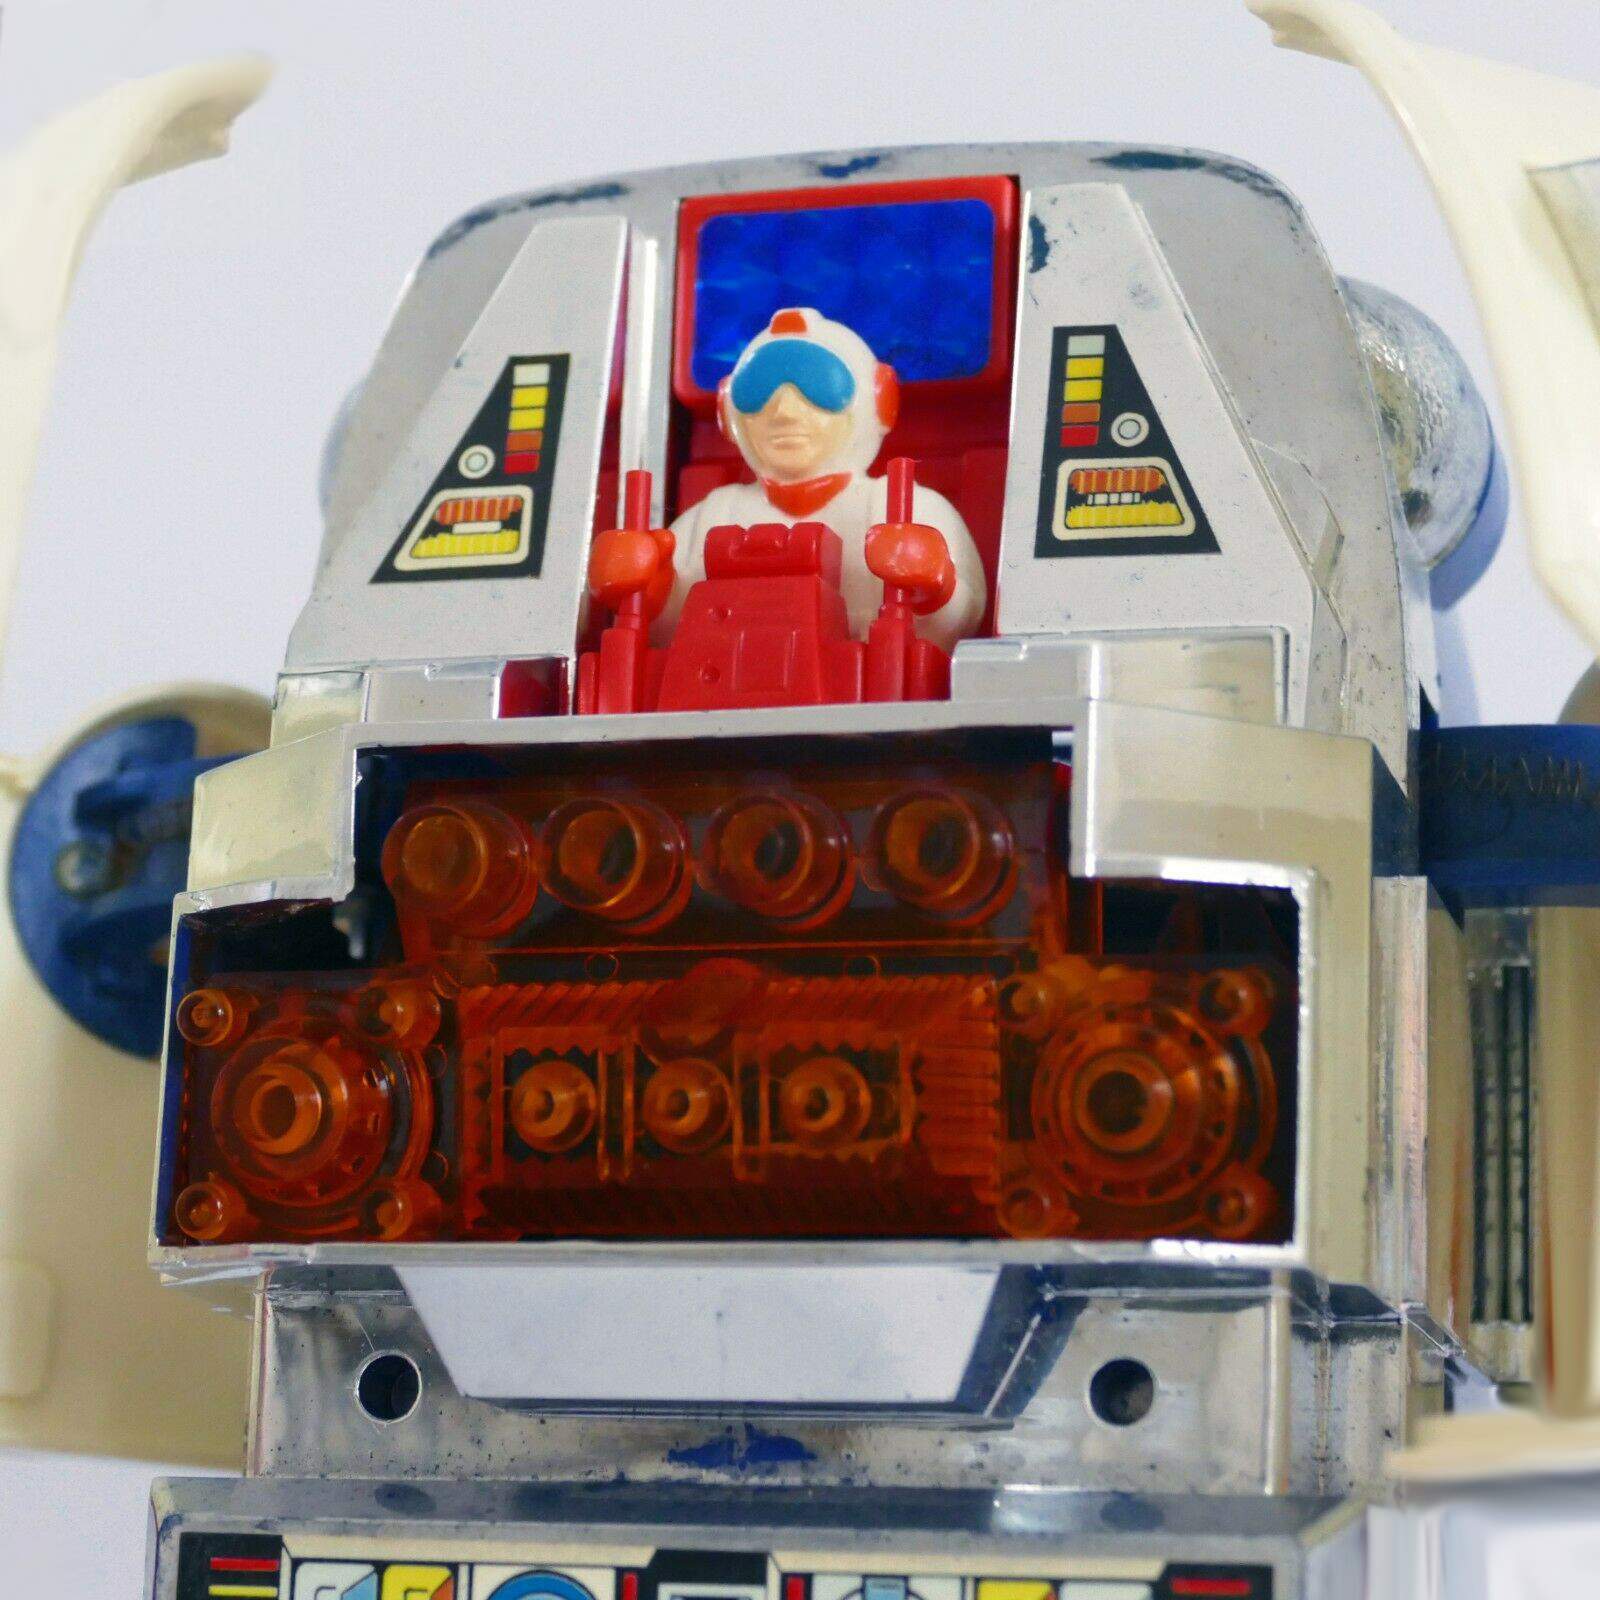 Lambda X Robot